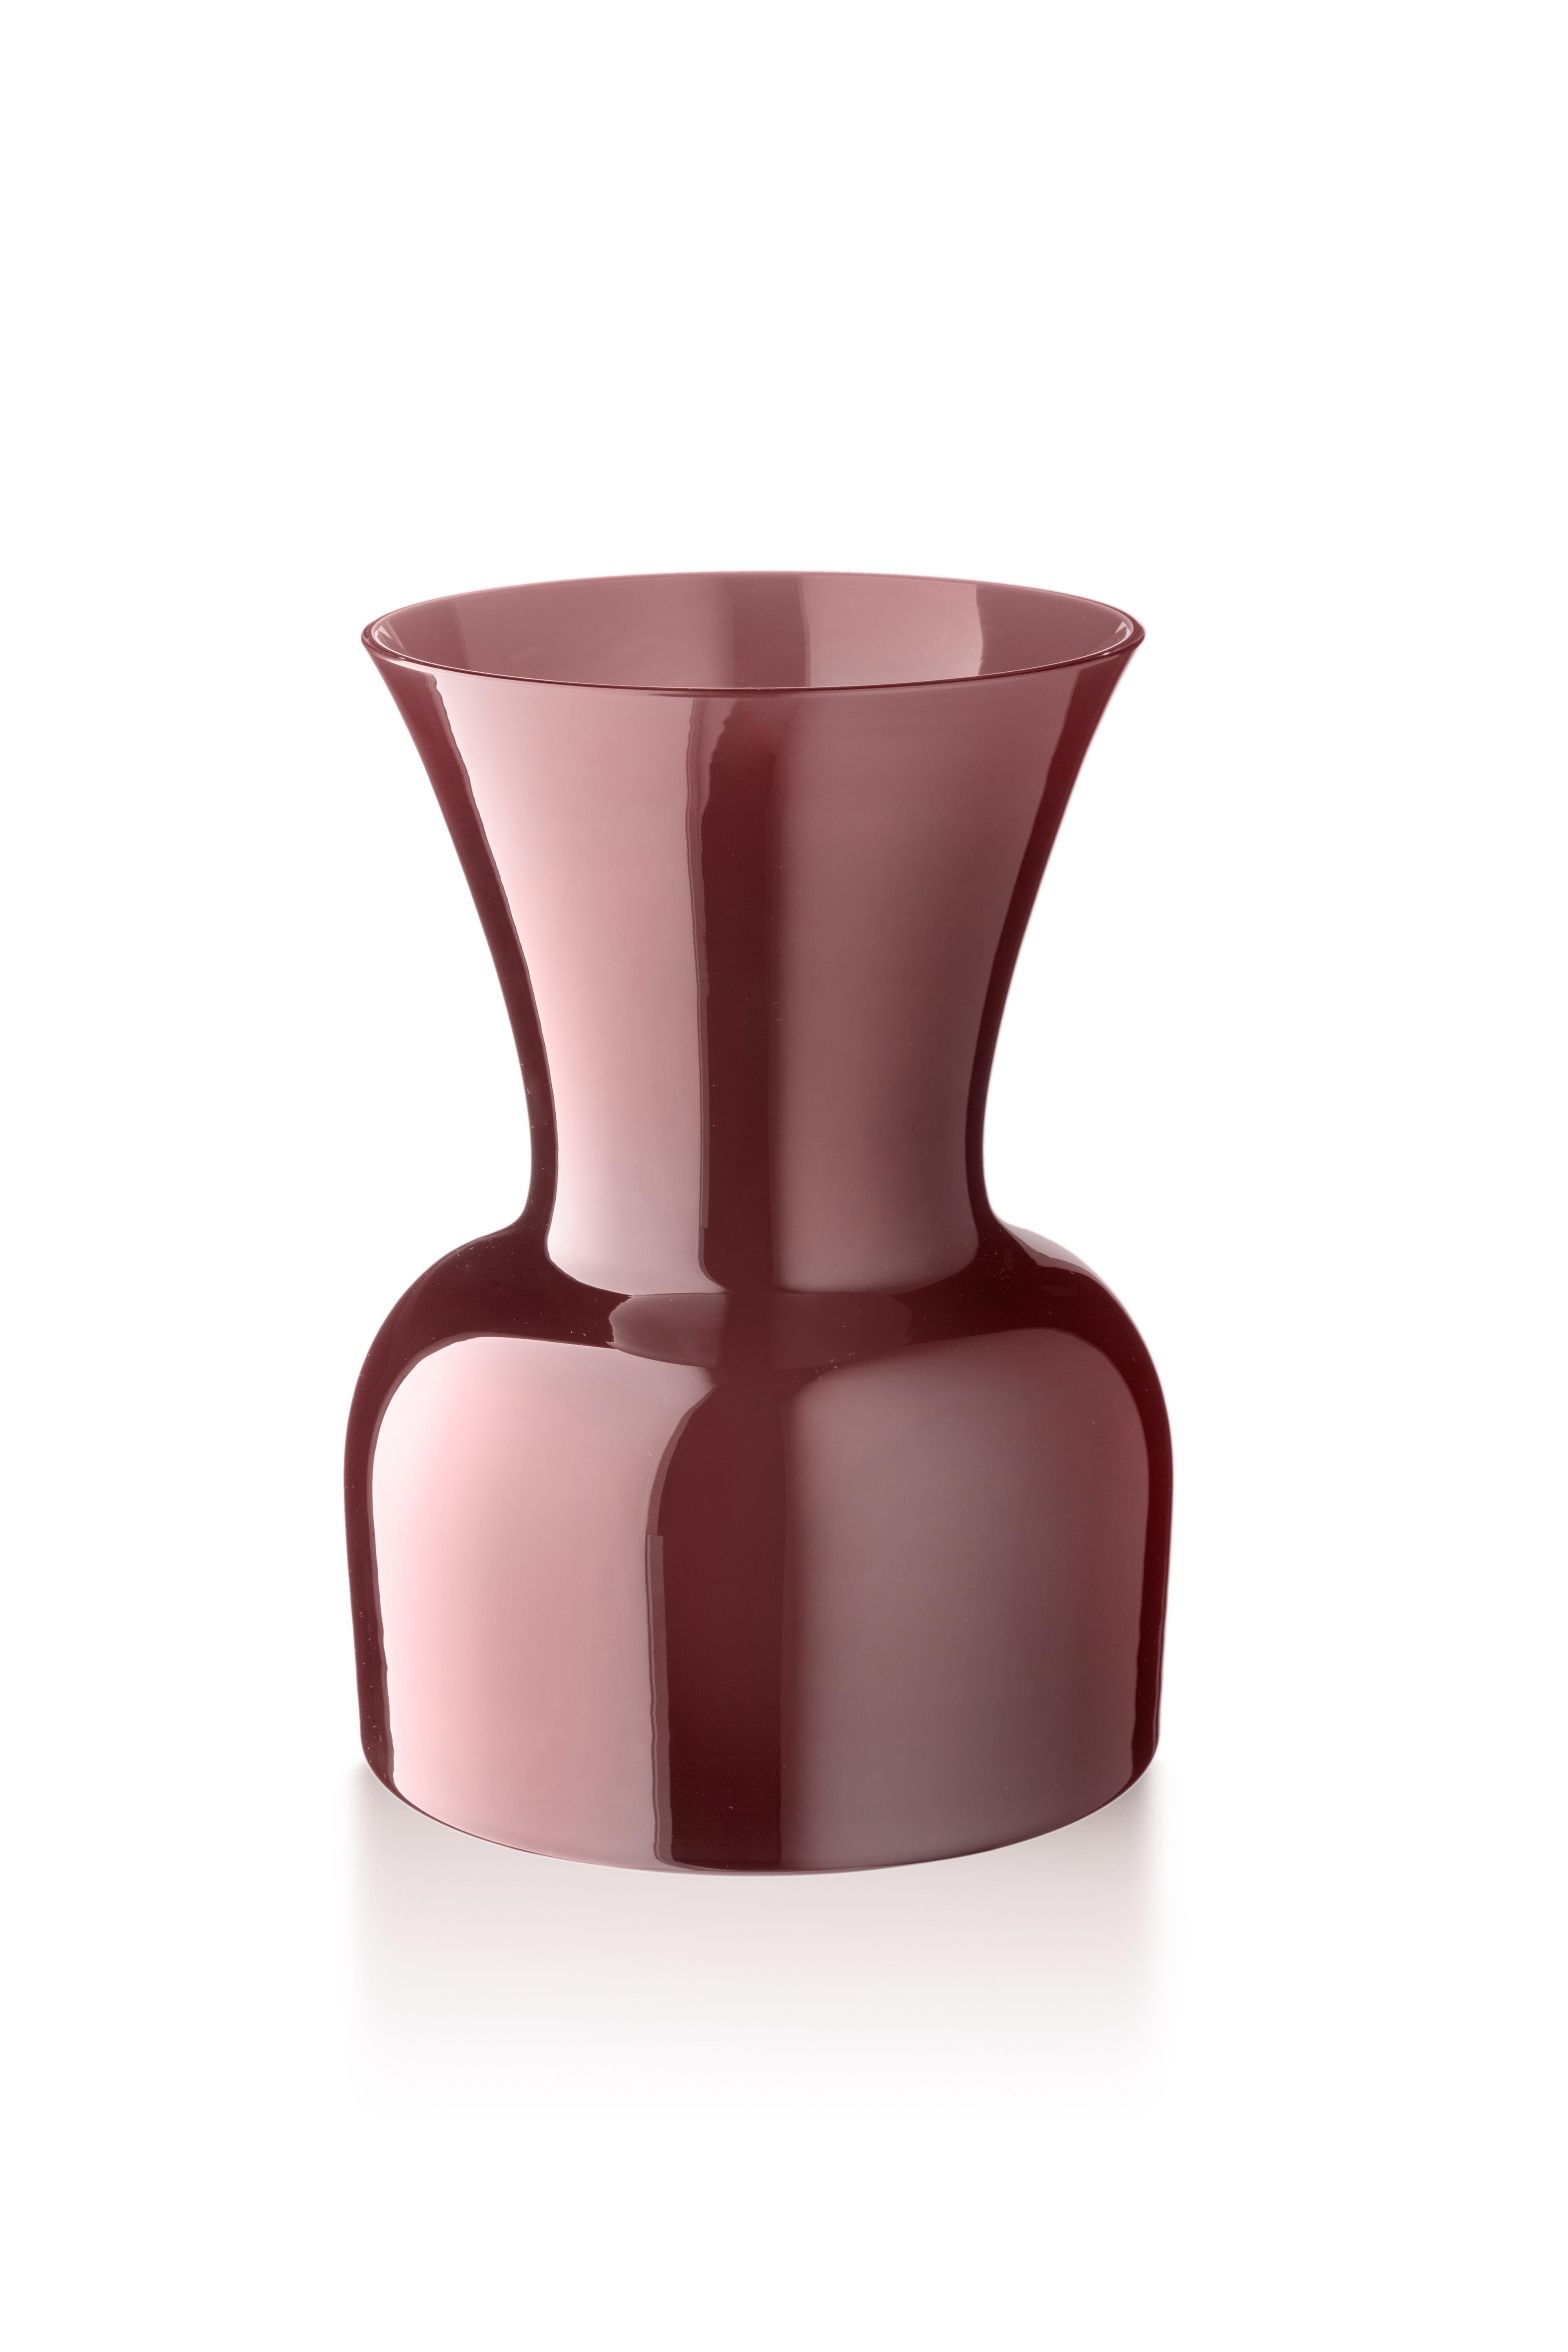 Purple (10057) Large Profili Daisy Murano Glass Vase by Anna Gili